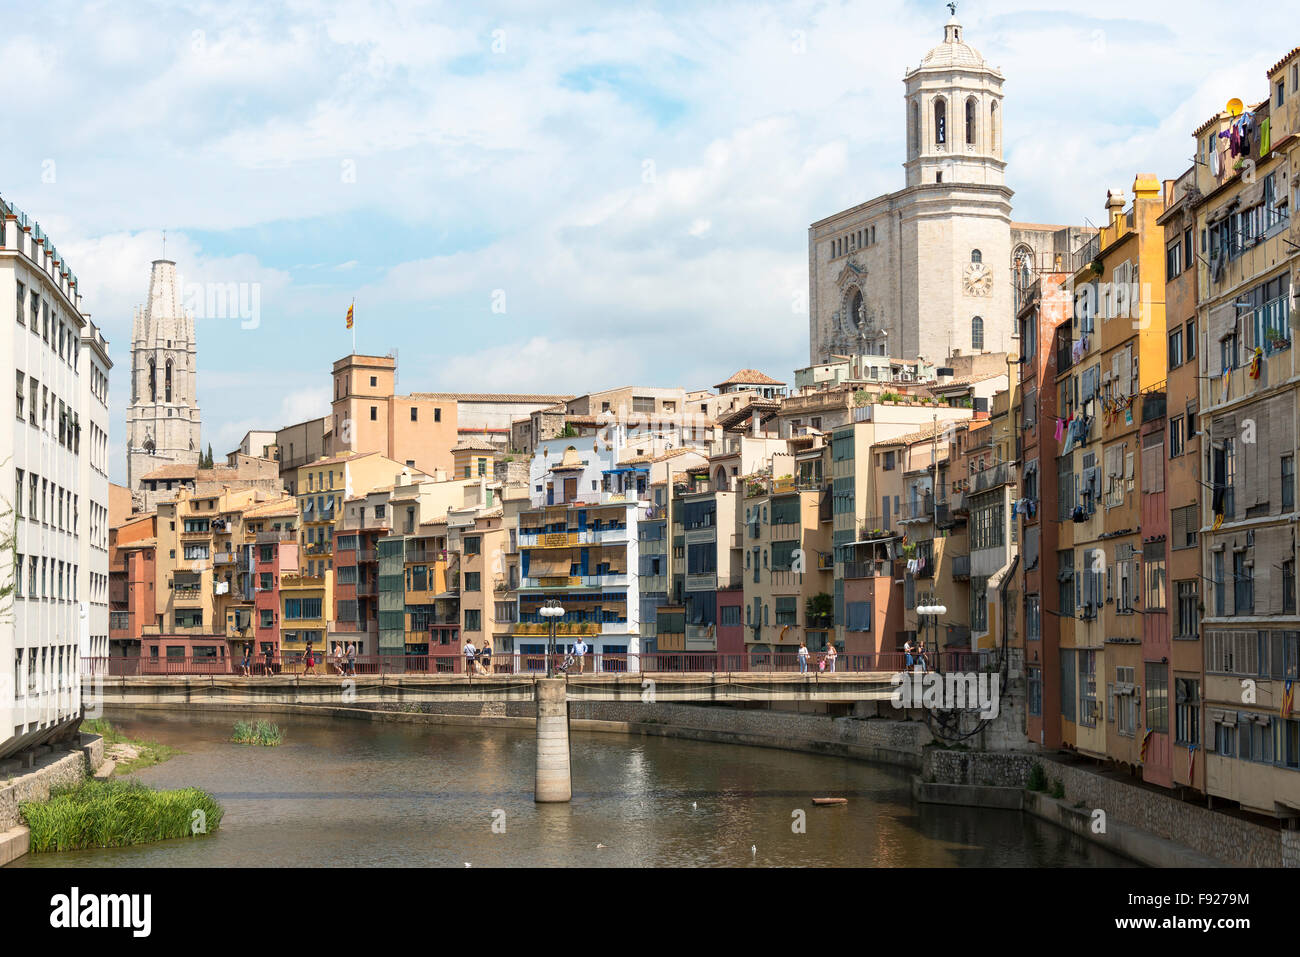 Onyar River and Old Town, Girona (Gerona), Province of Girona, Catalonia, Spain Stock Photo